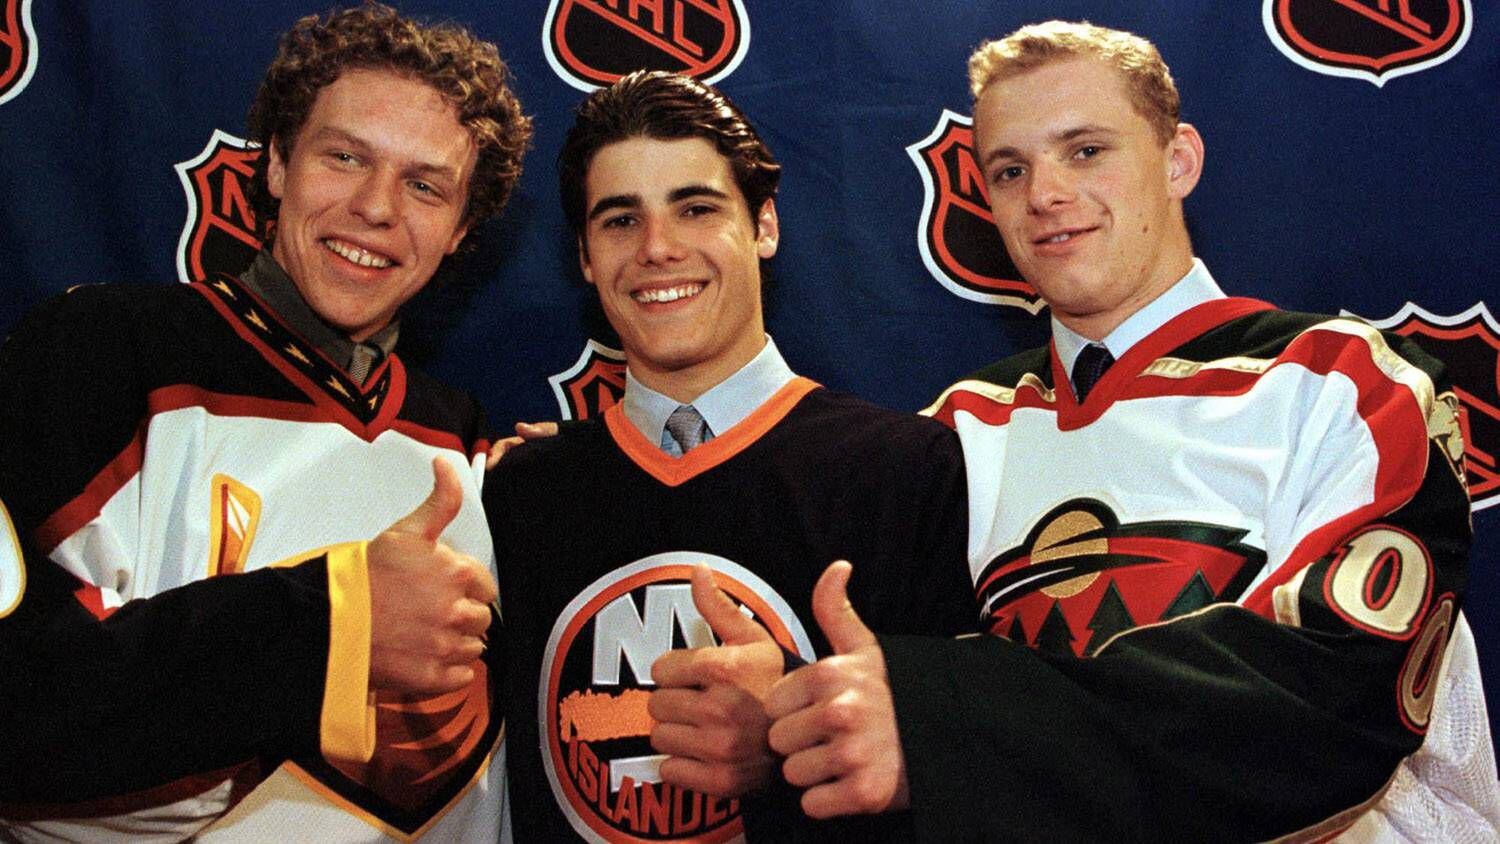 ДРАФТ НХЛ 2000 года. Первый номер драфта НХЛ. ДРАФТ НХЛ 2003 фото. Ре ДРАФТ НХЛ. Первые номера драфта